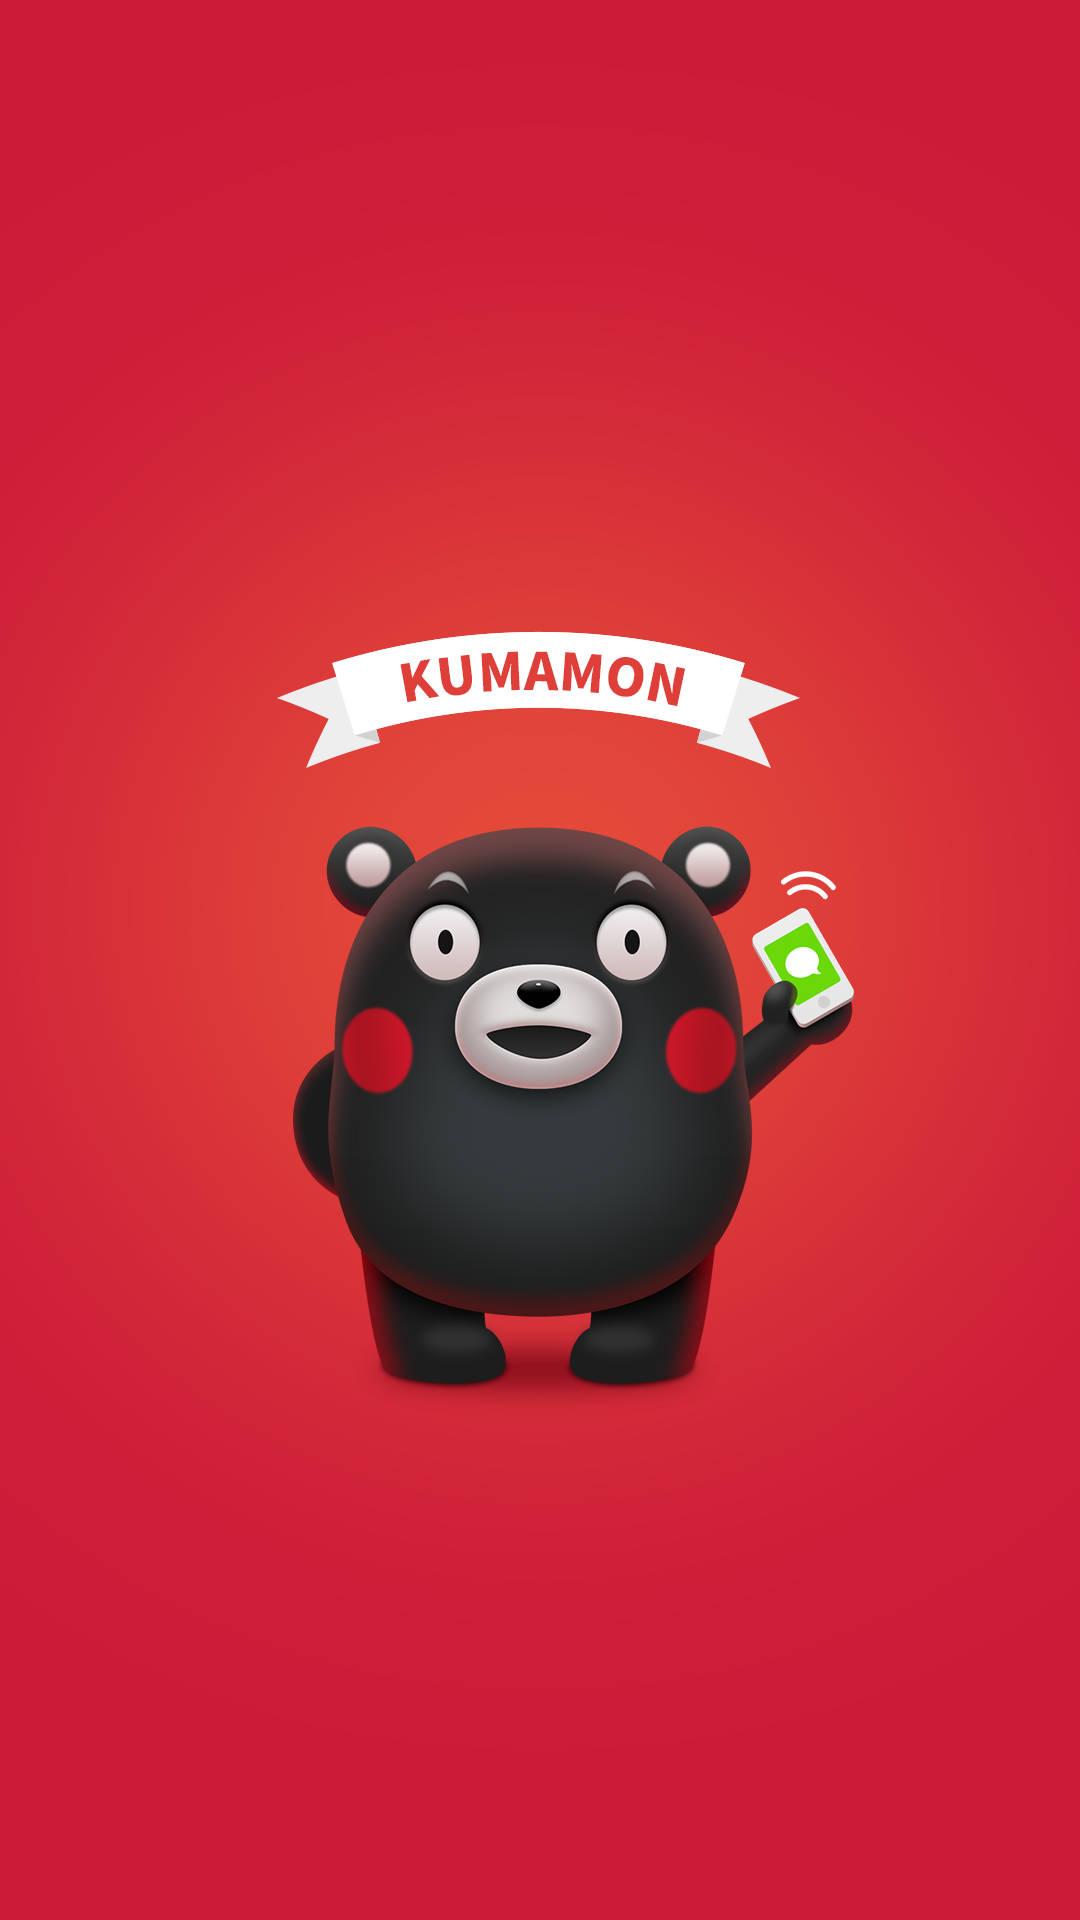 3d Kumamon On Red Background